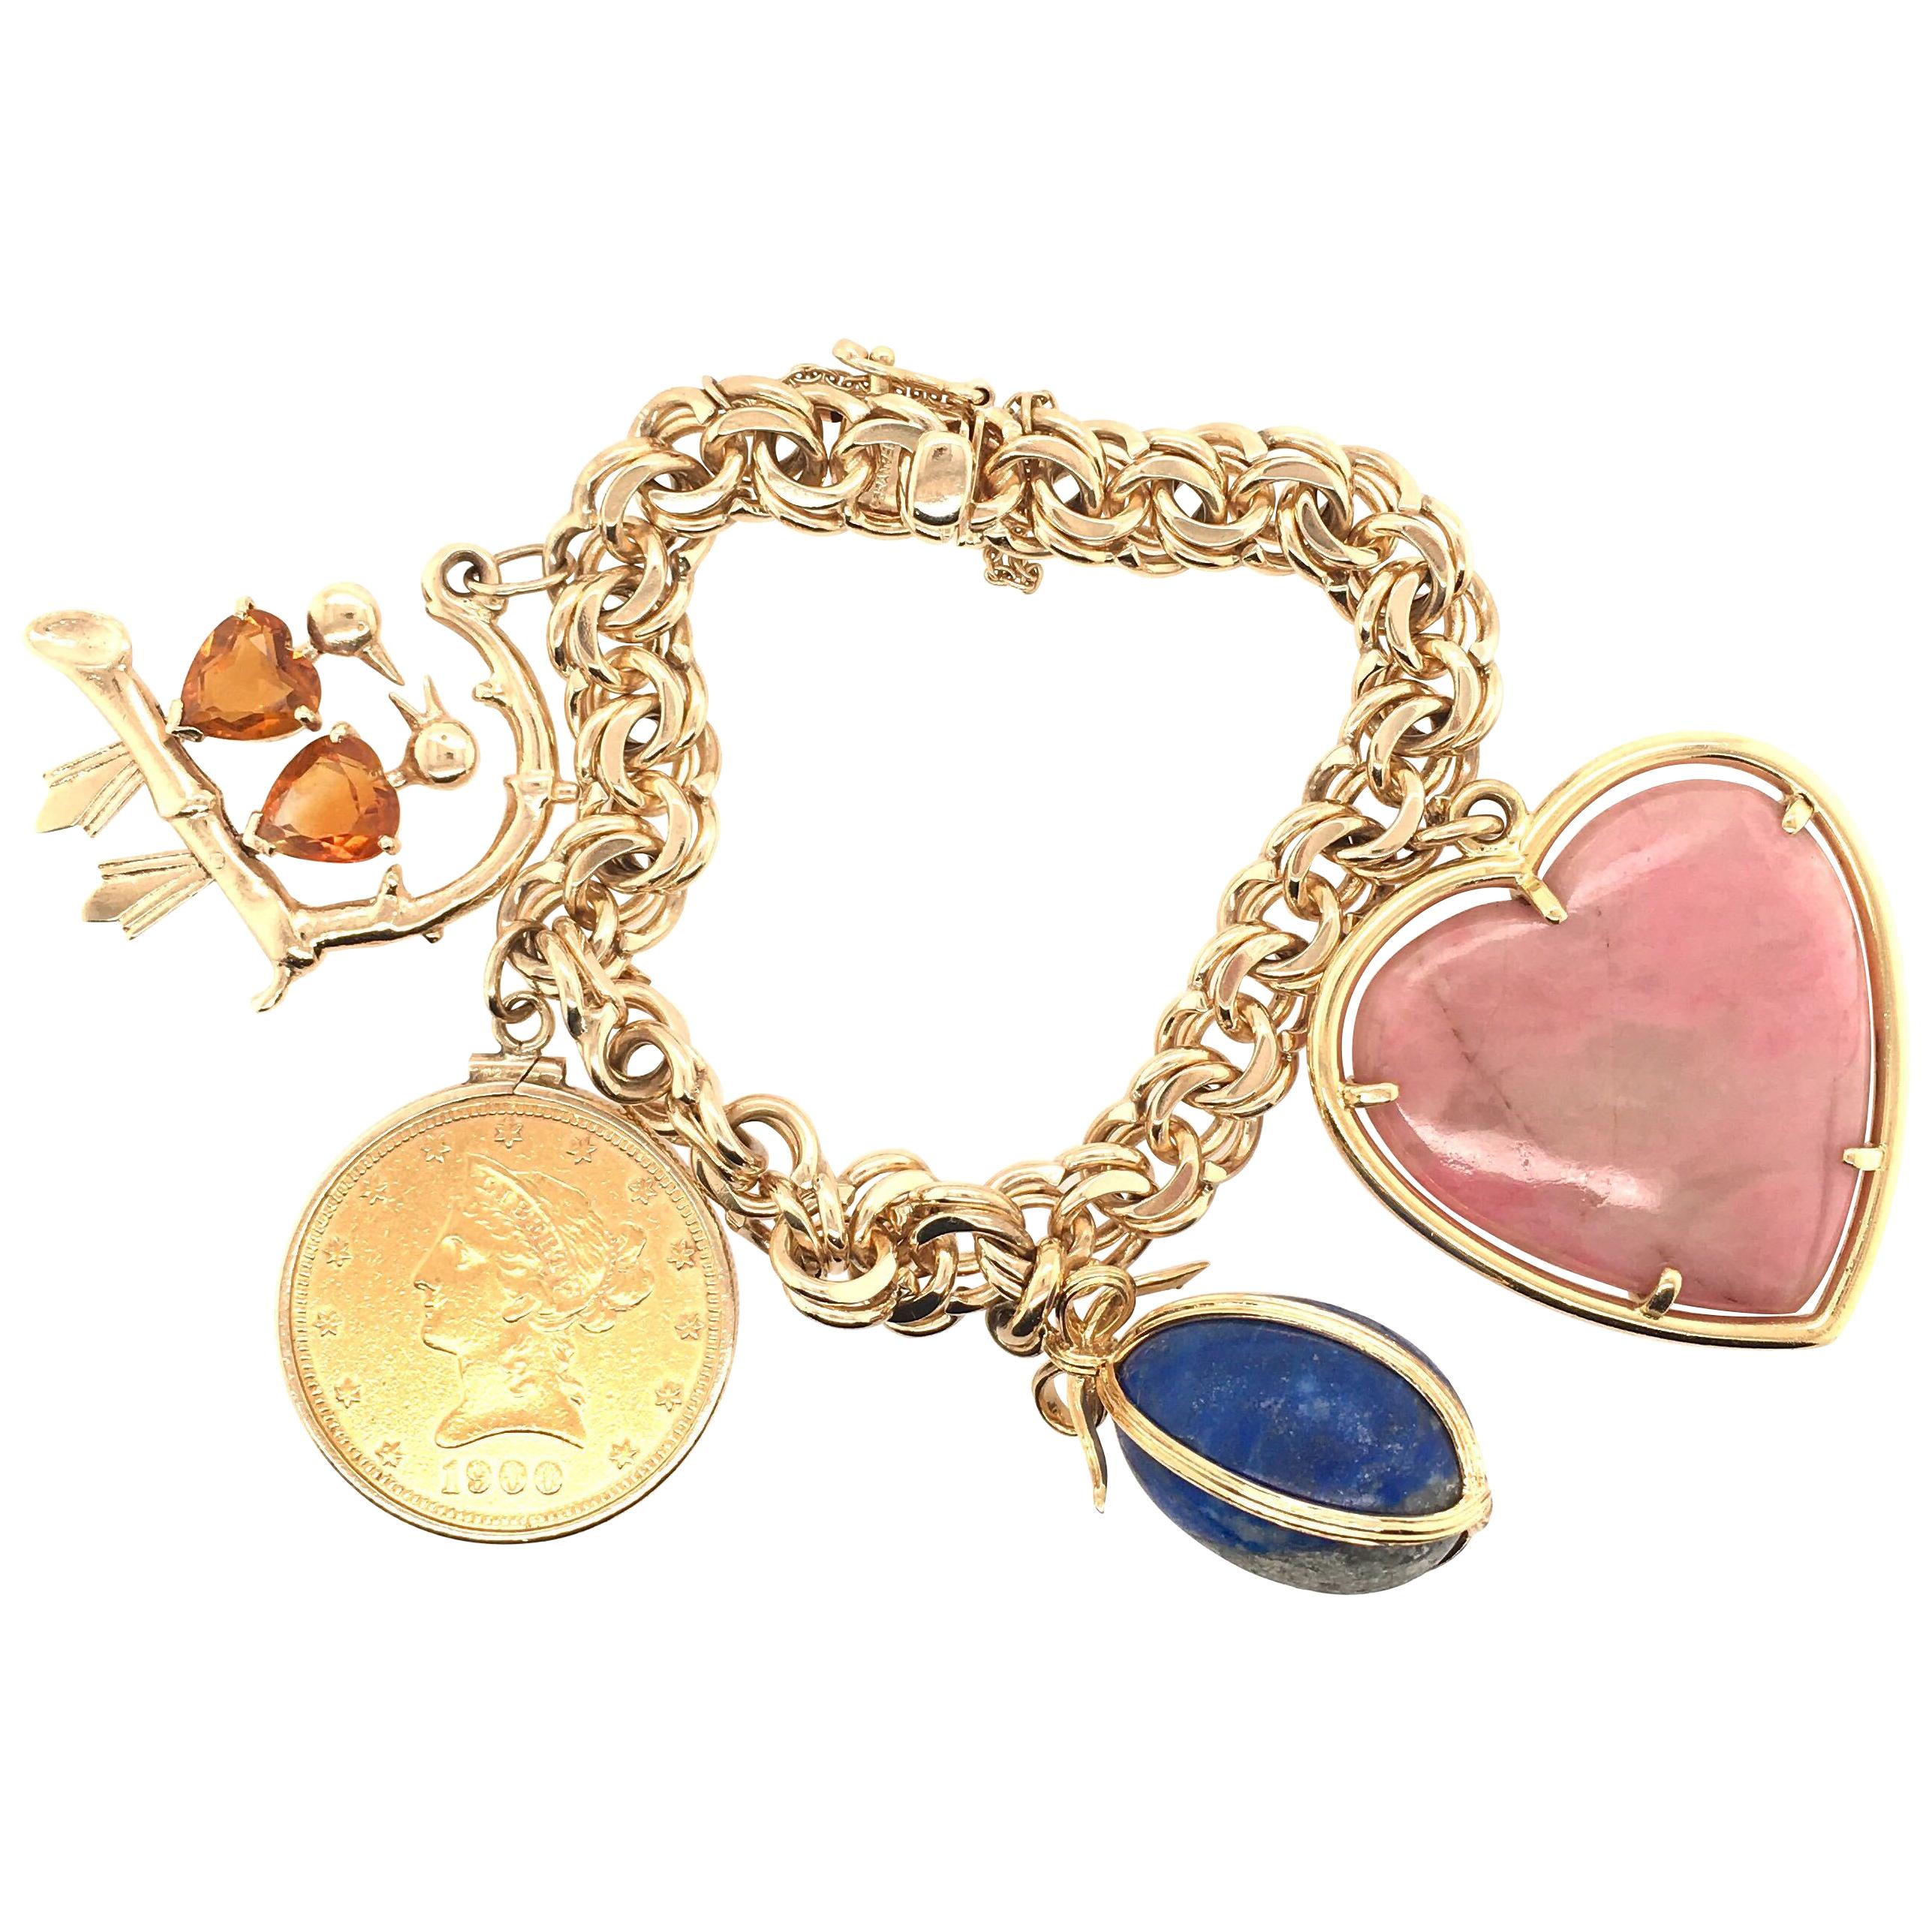 Tiffany & Co., Gold Bracelet and Four Gem Set Charm